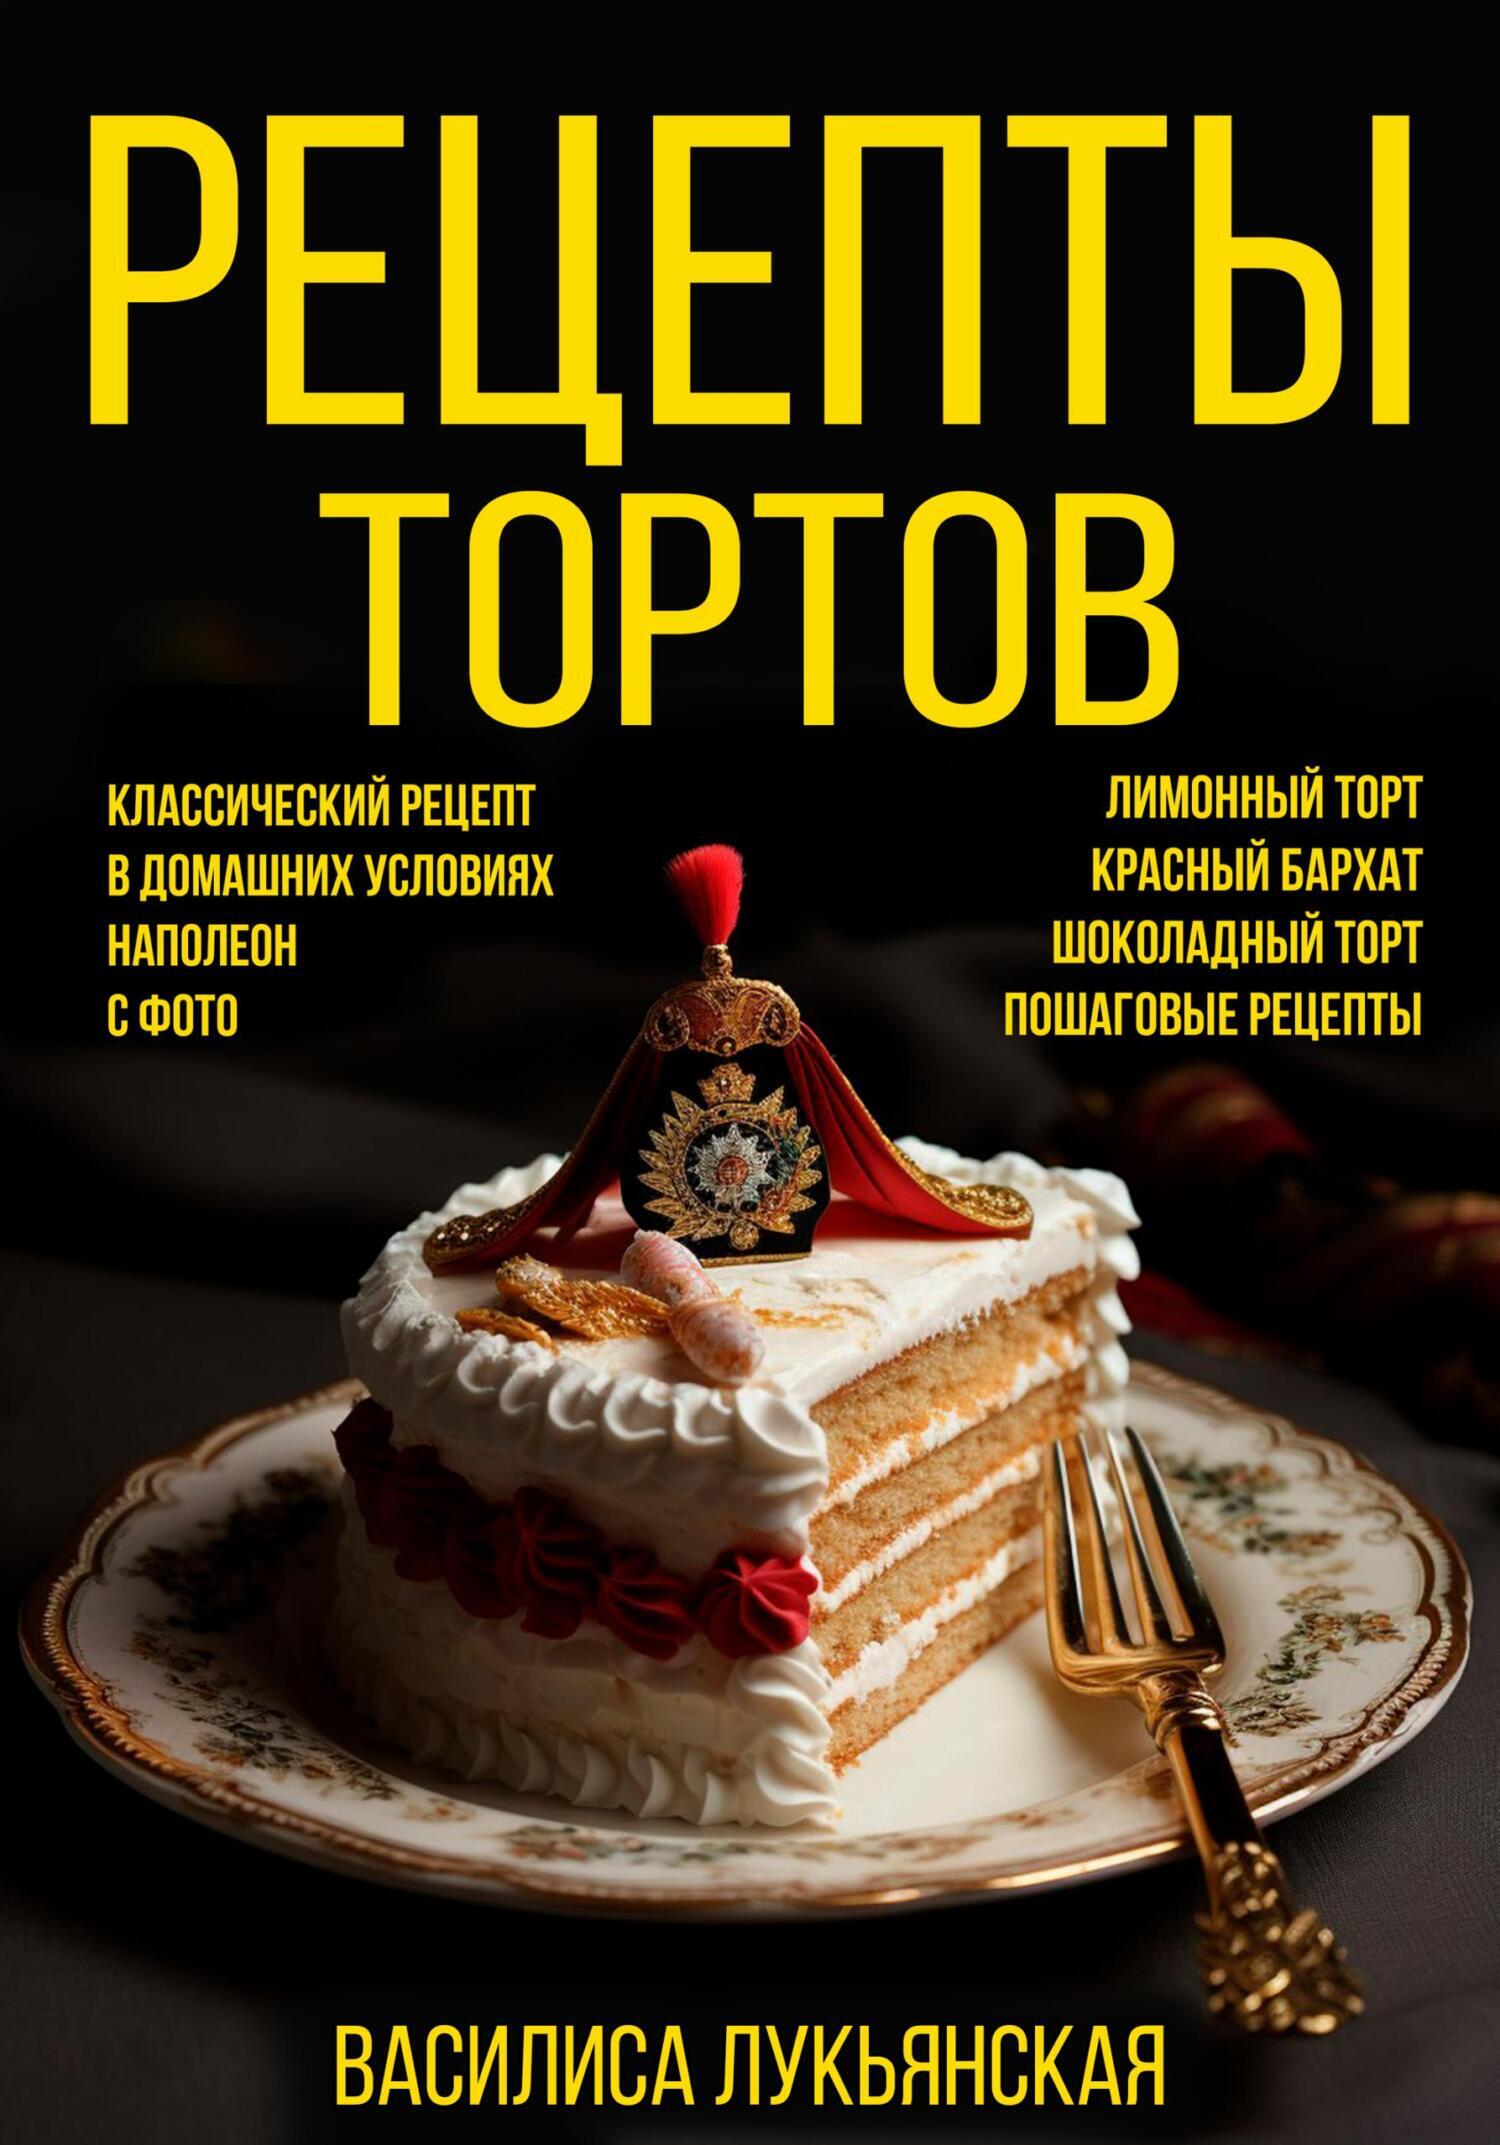 Торт «Наполеон» на сковороде | Волшебная hb-crm.ru